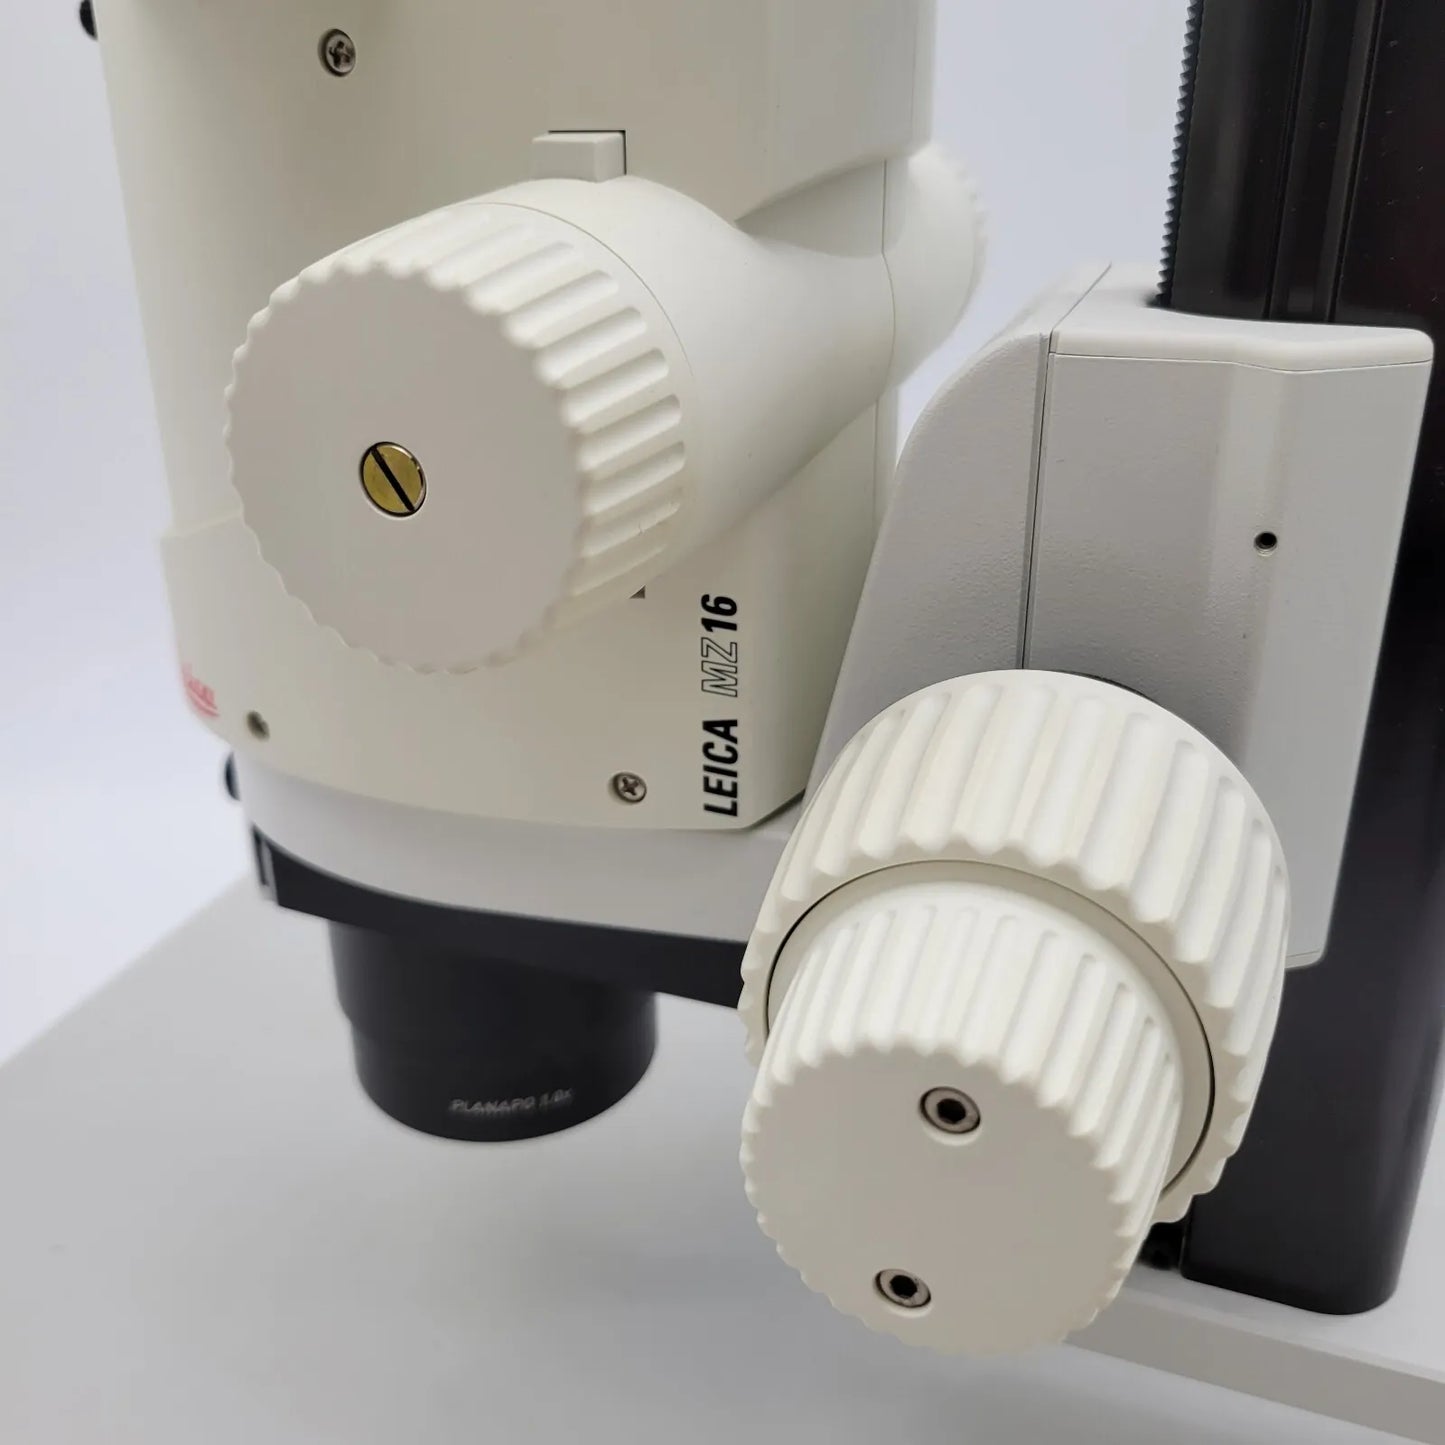 Leica Stereo Microscope MZ16 with Planapo 1.0x, Revolving Nosepiece, & Phototube - microscopemarketplace